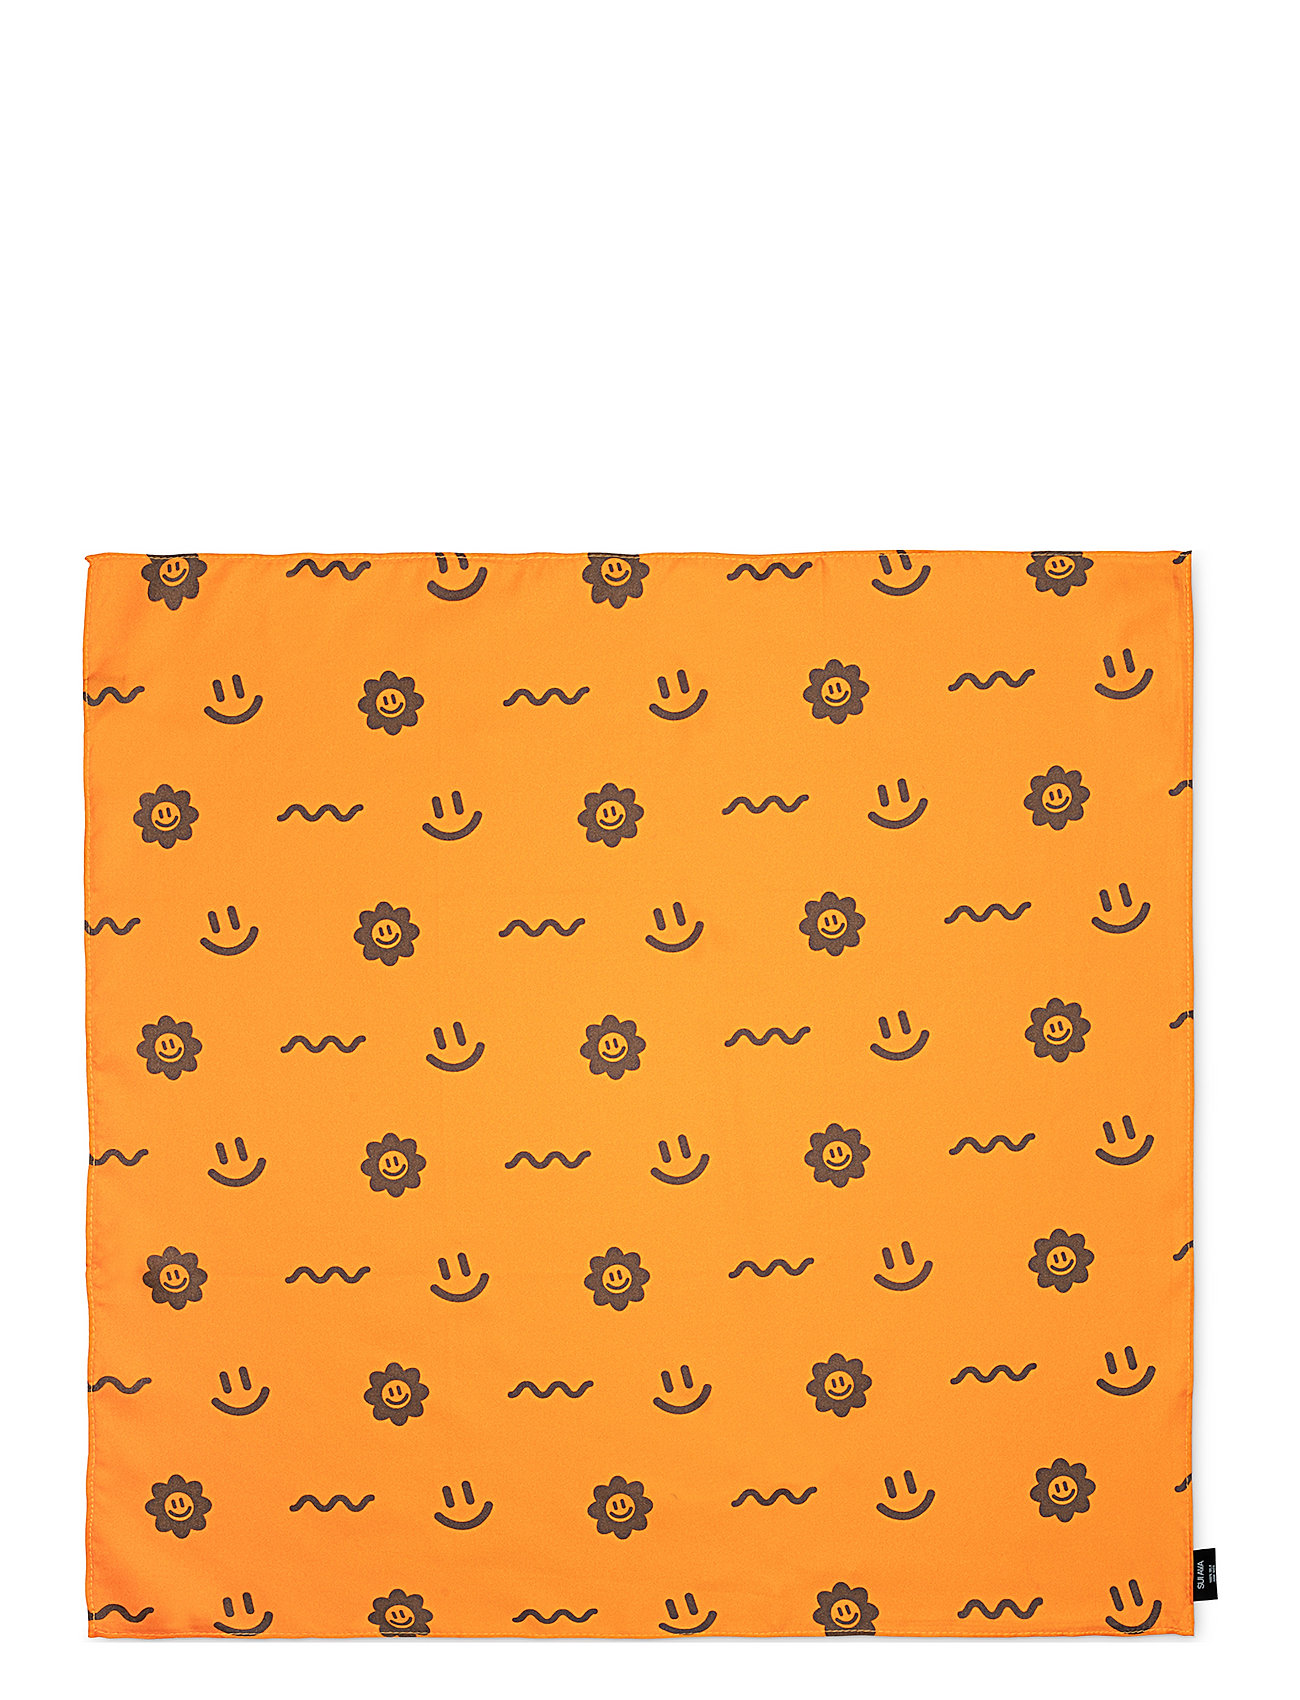 Silk Scarf Positivity Accessories Scarves Lightweight Scarves Orange Sui Ava